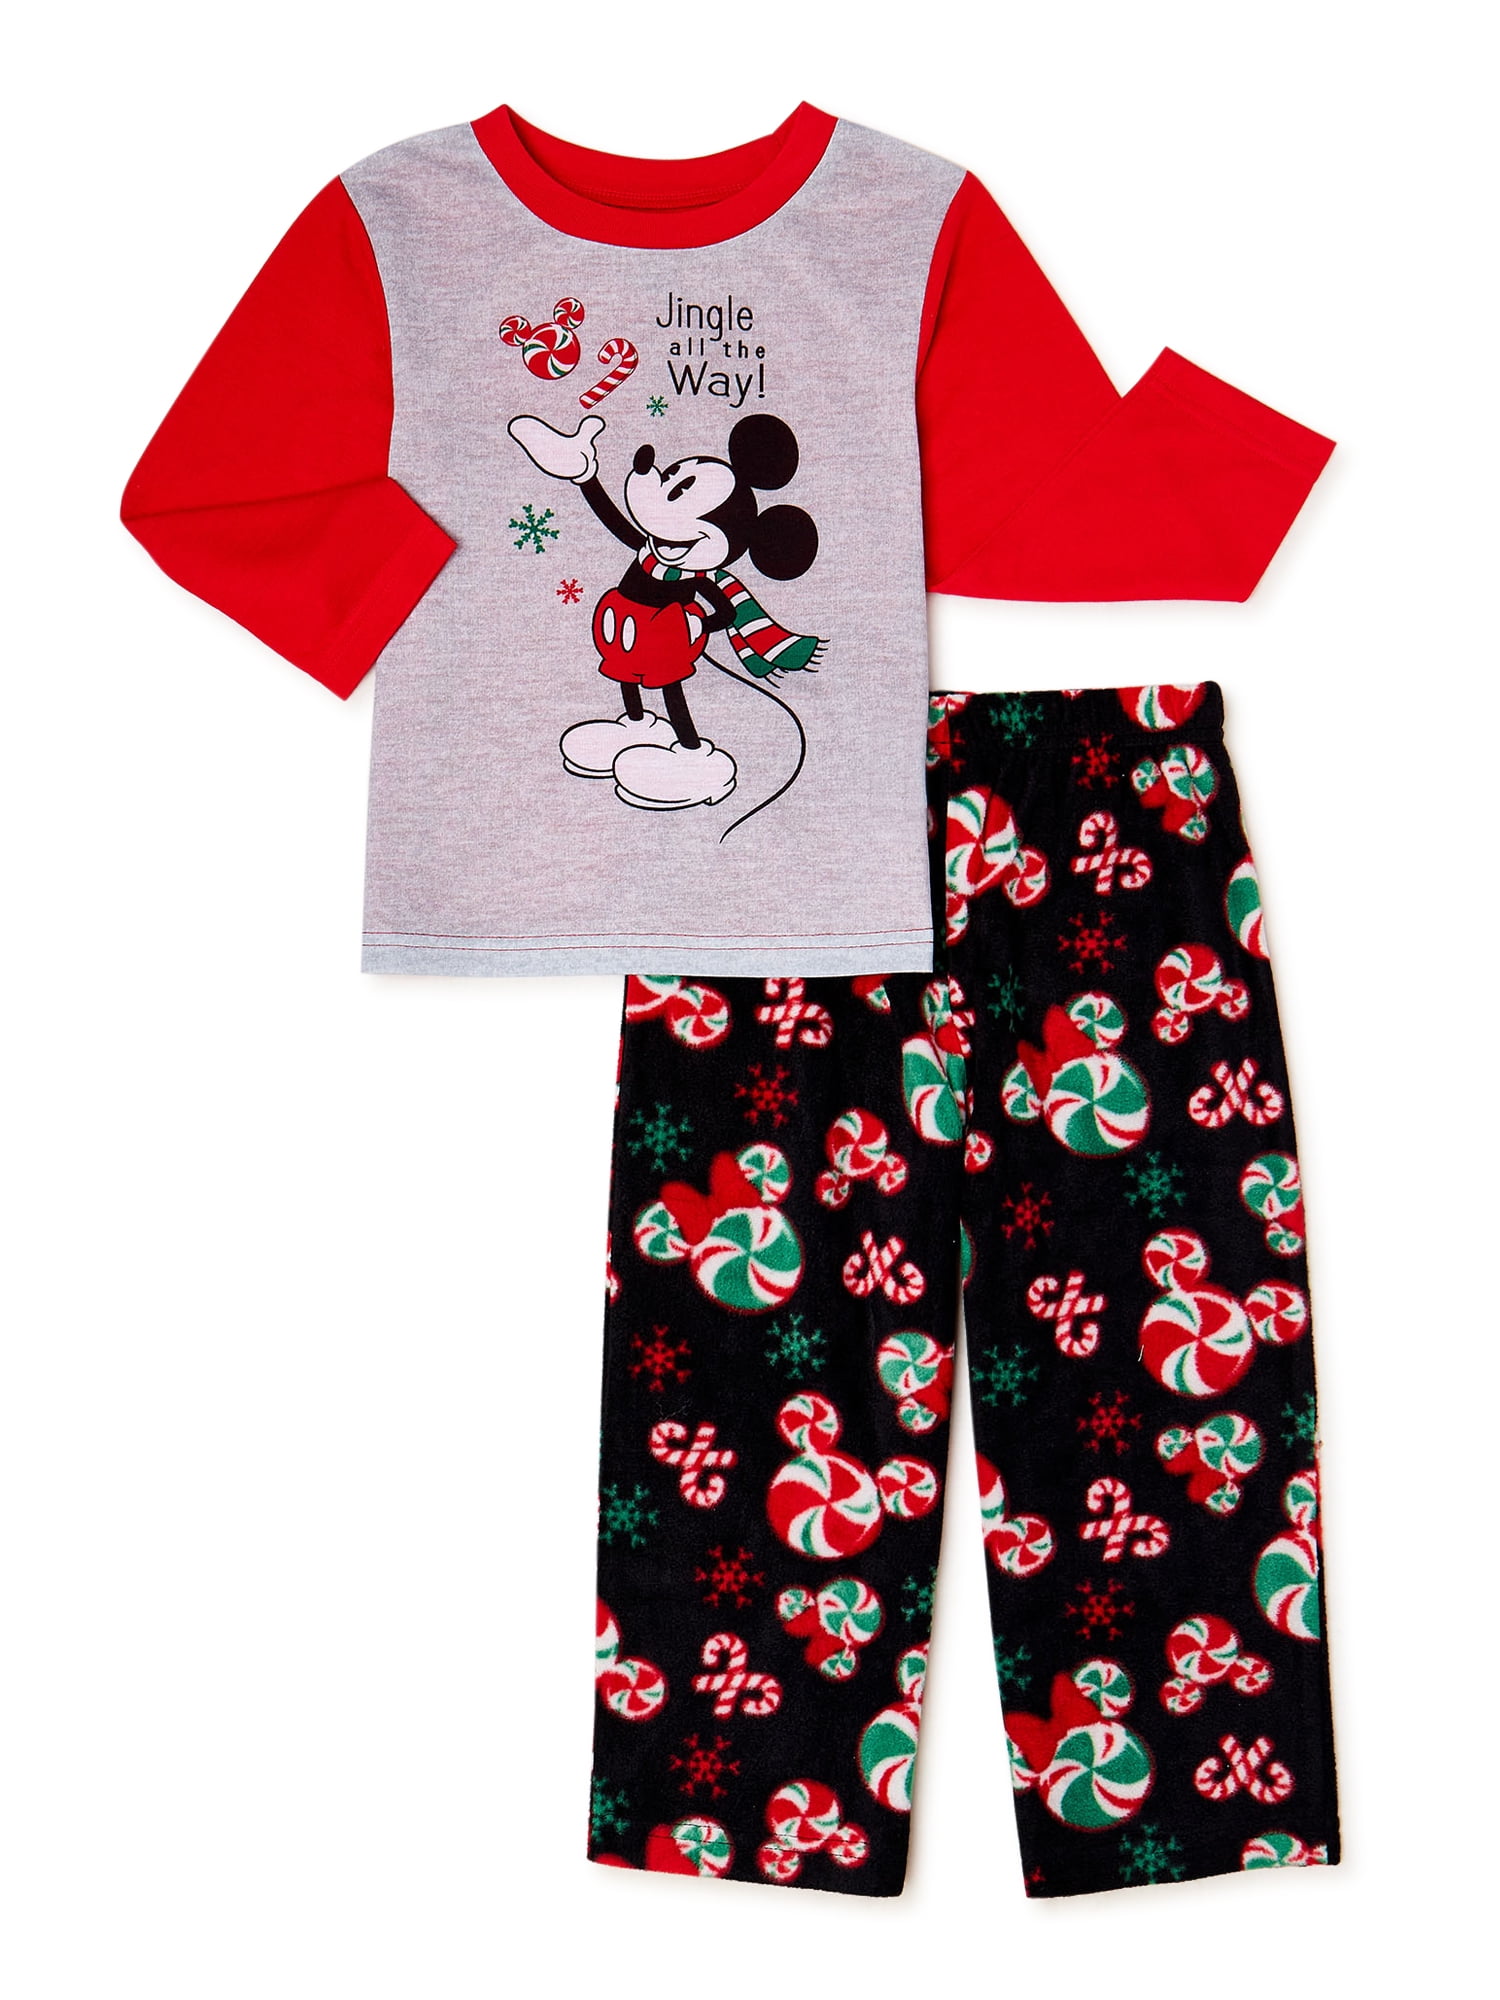 Cute Disney Mickey Mouse Family Christmas Pajamas Sets | Mickey and Minnie Xmas Pjs for Holiday Gifts Pajamas by Jenny M